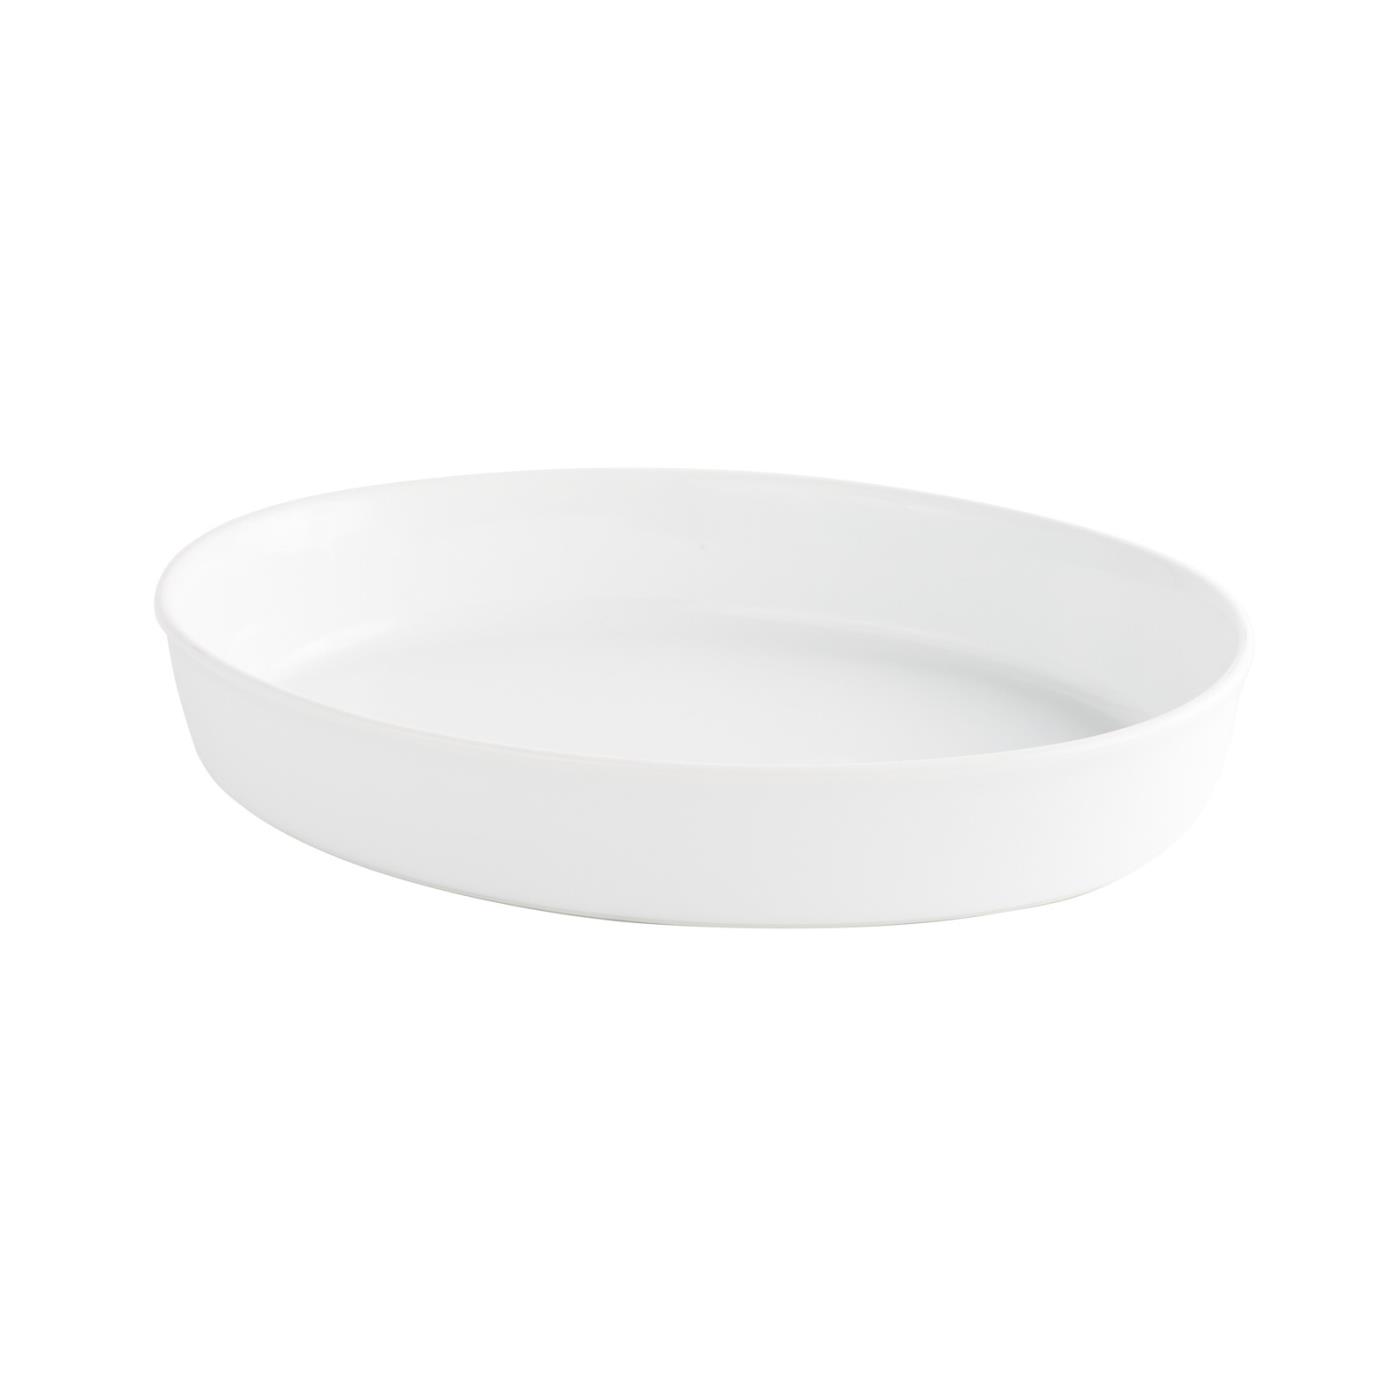 White Ceramic Oval Casserole Dish - 12.5" x 8.75"